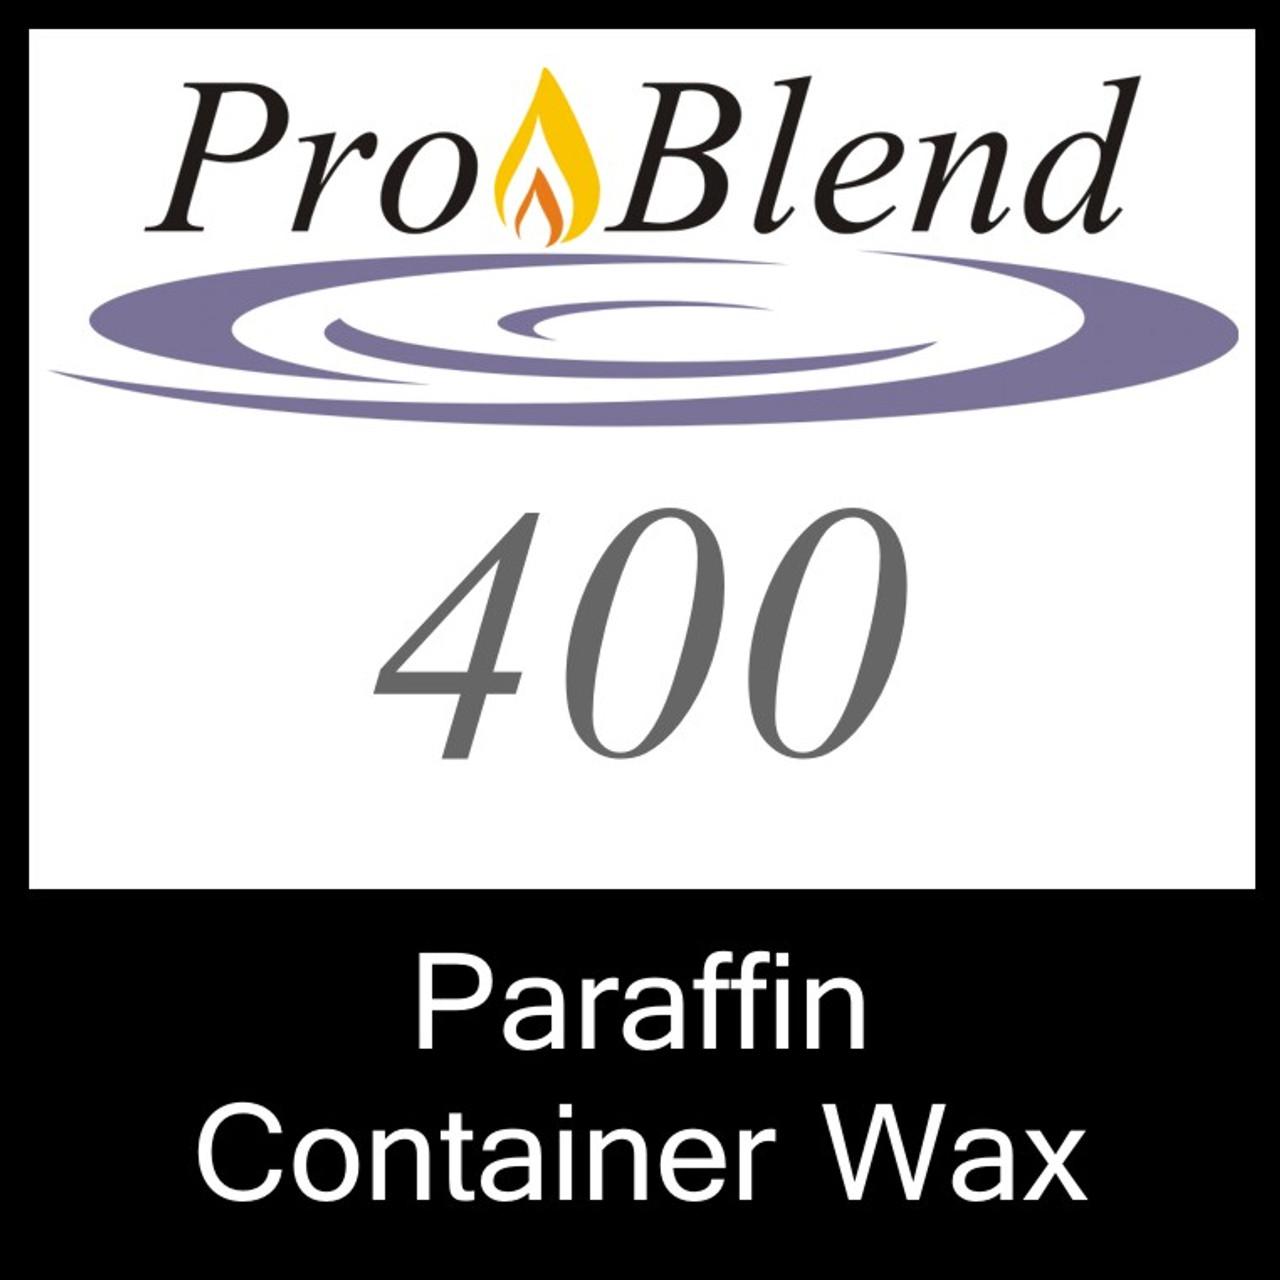 ProBlend 400 Paraffin Container Wax